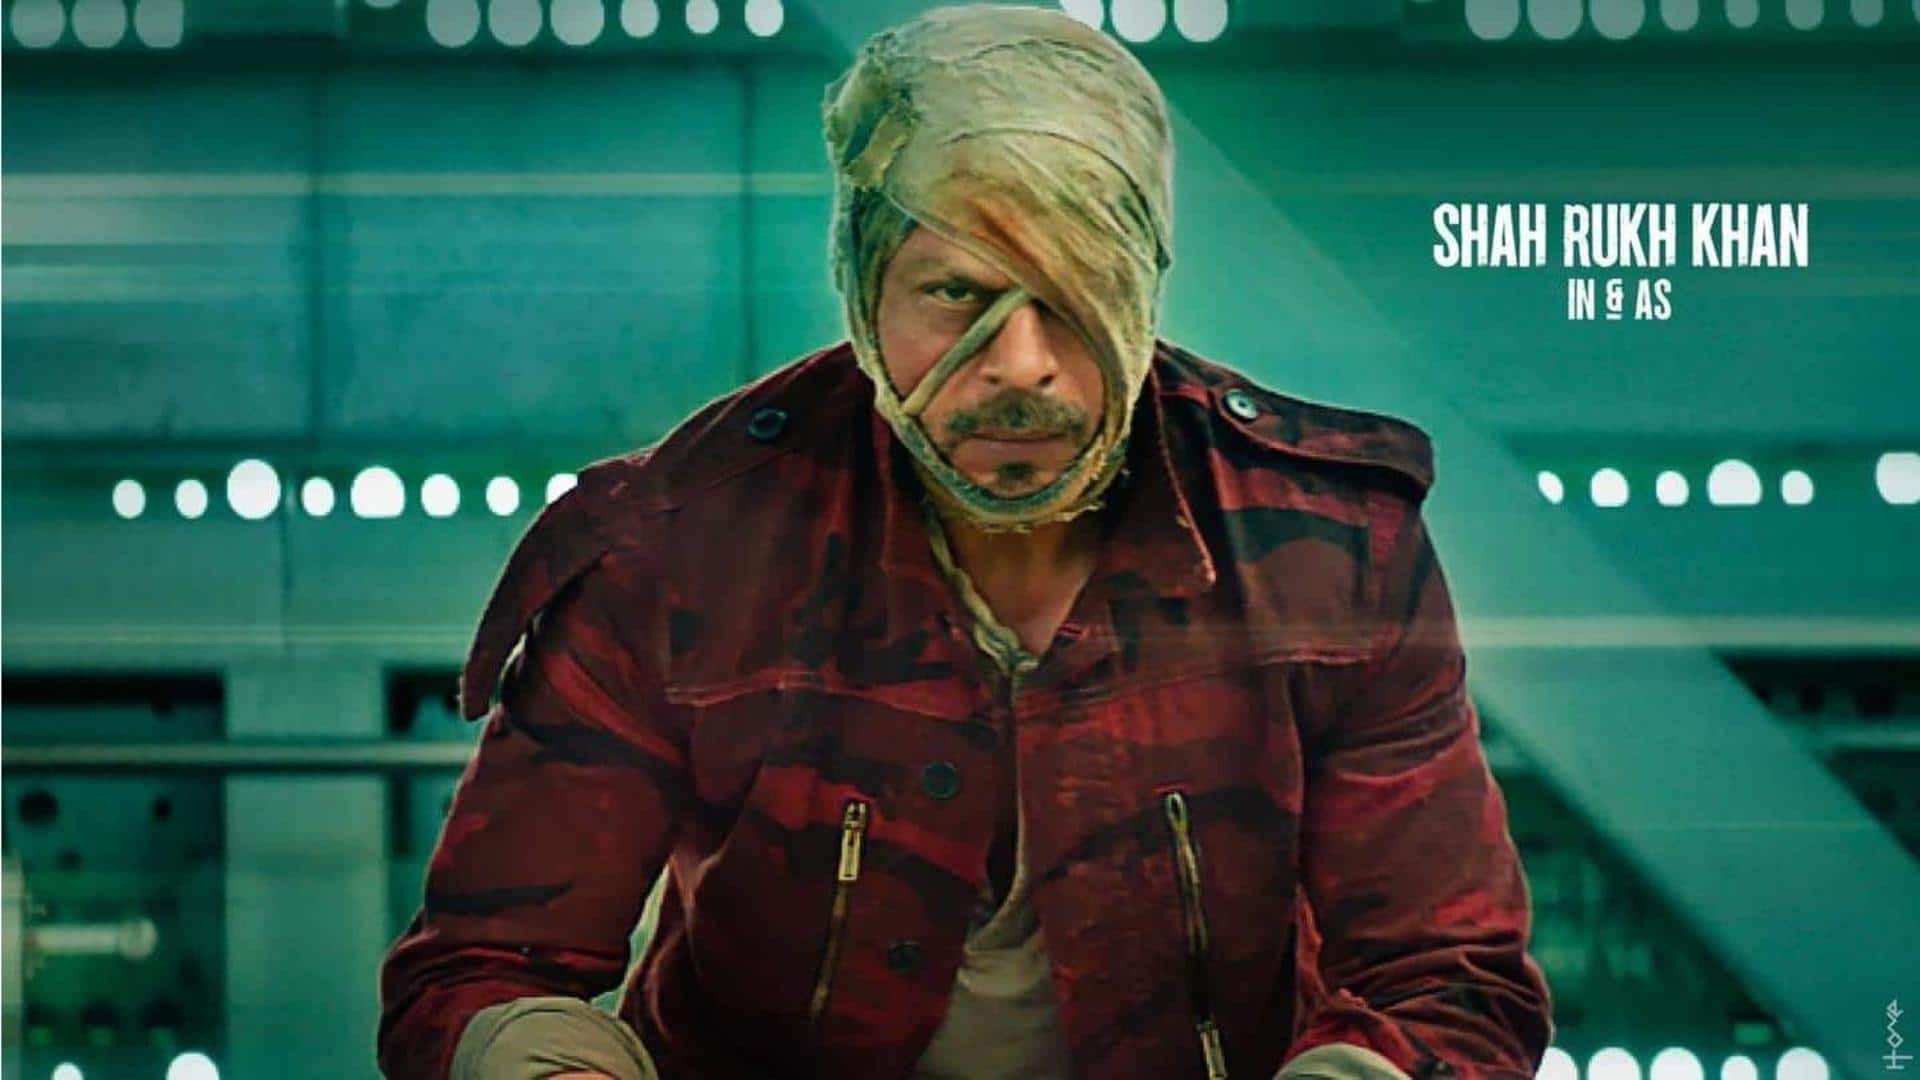 Atlee's SRK starrer 'Jawan' plagiarized from Tamil film 'Perarasu'?